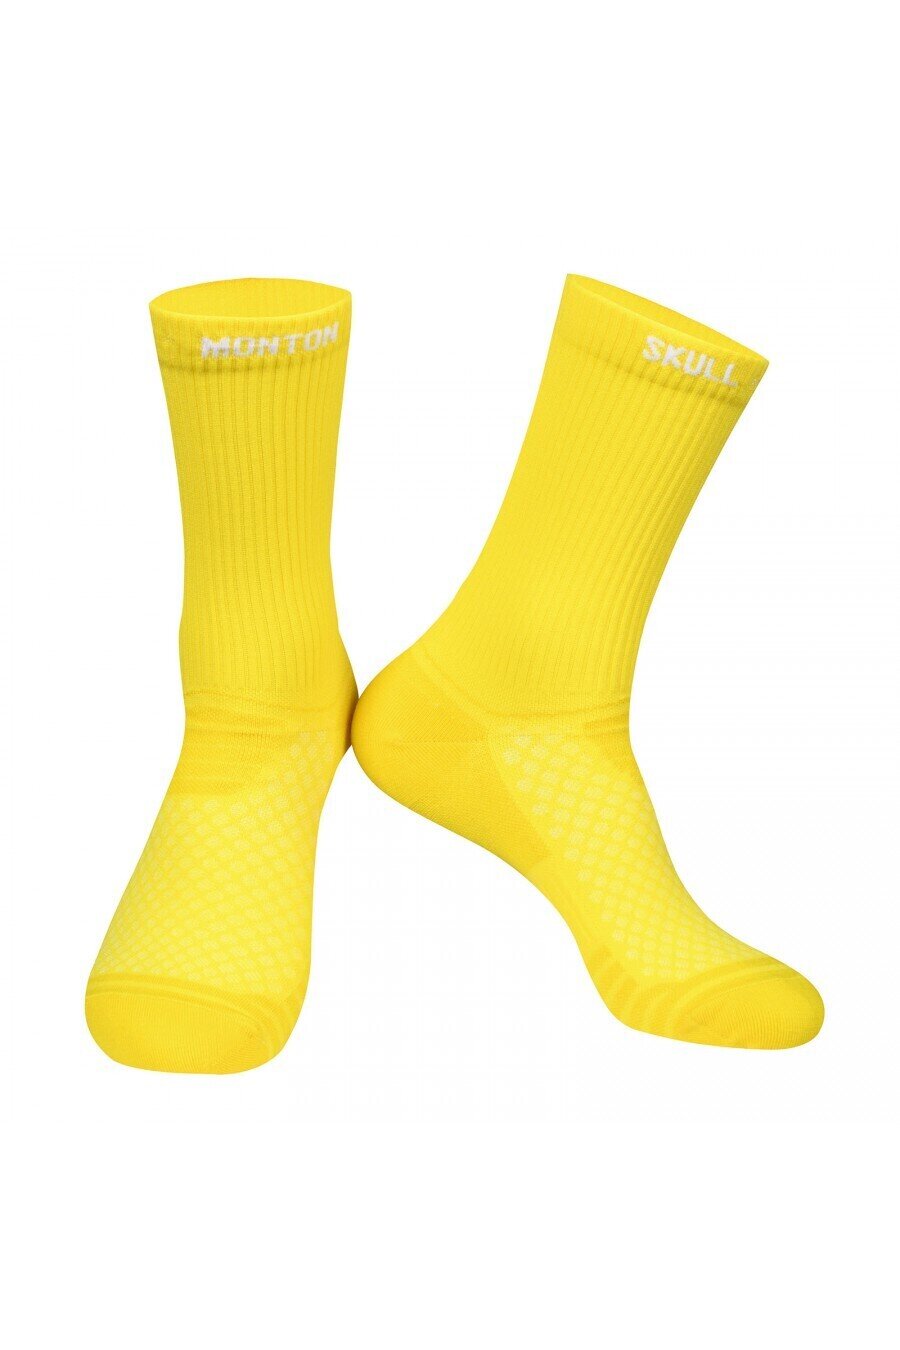 Monton SKULL Monday Yellow Socks